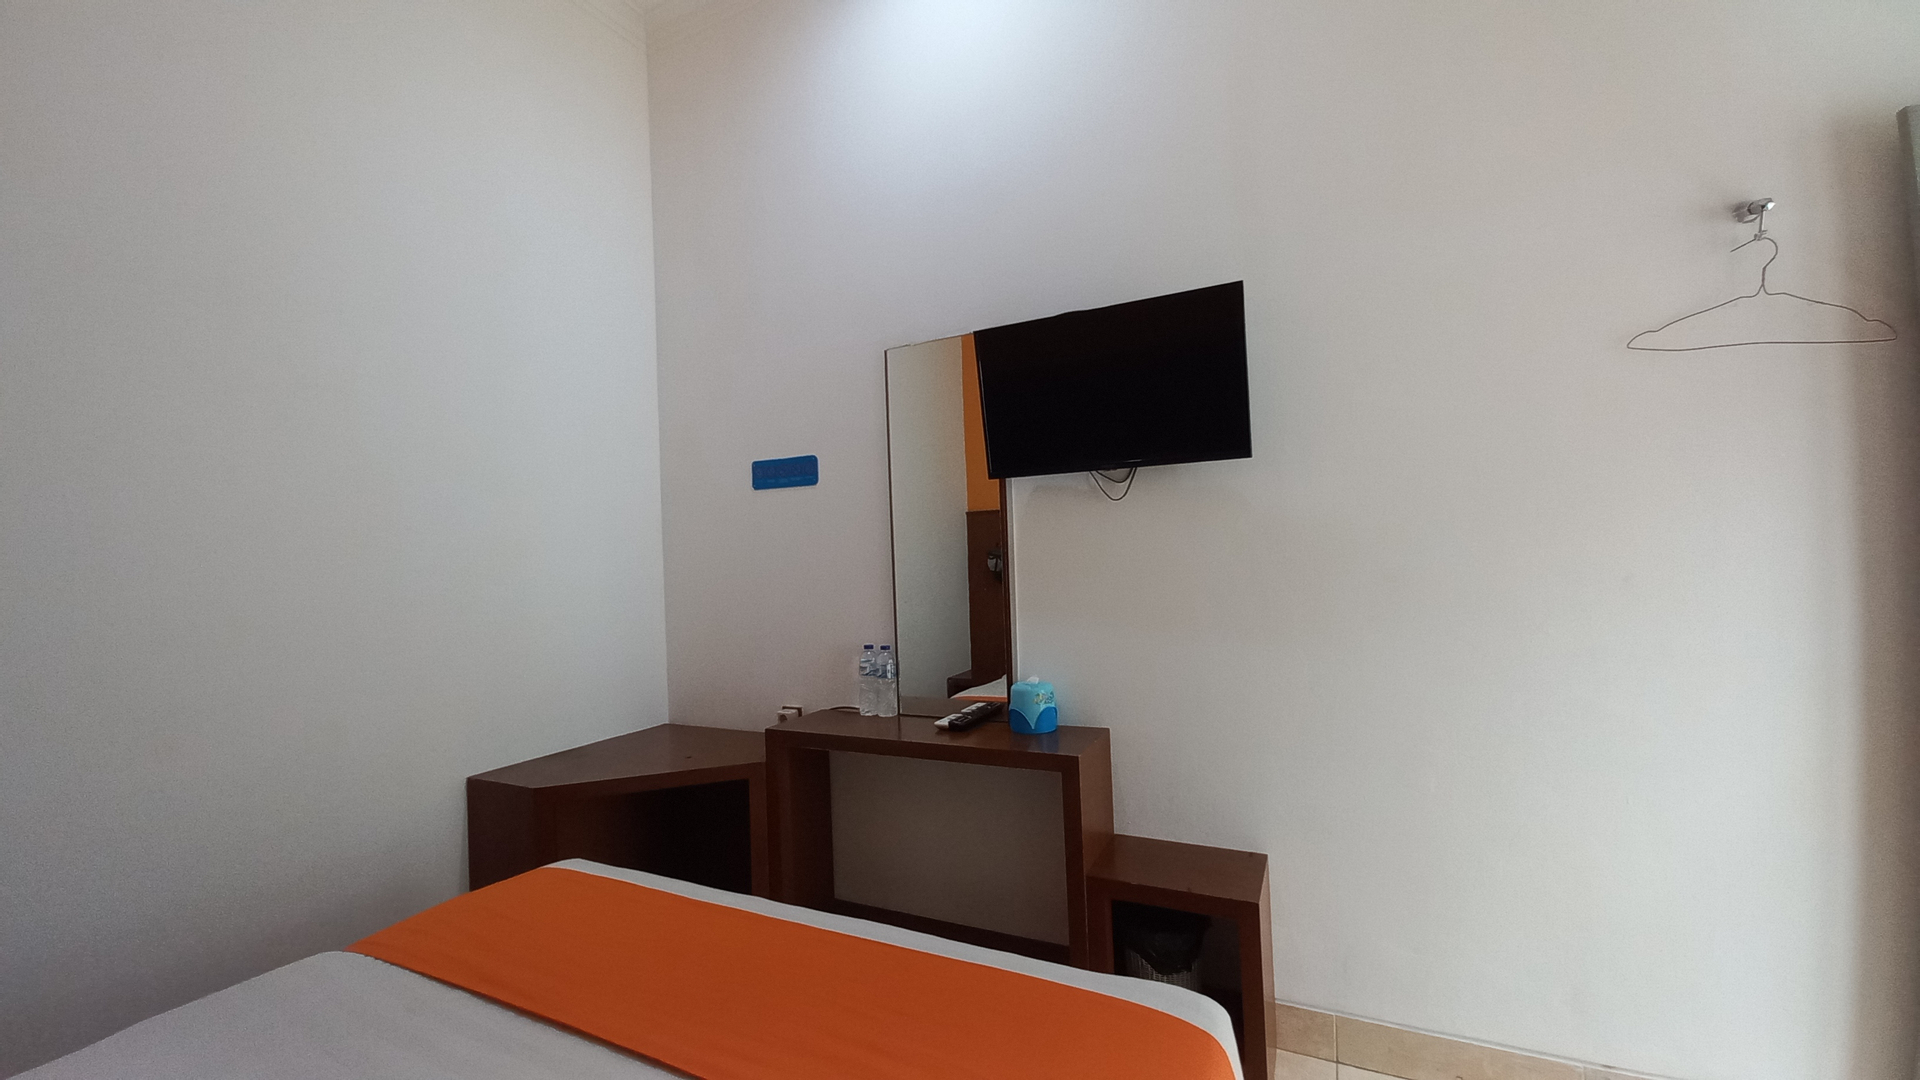 Bedroom 3, Hotel Poncowinatan - Tugu Yogyakarta, Yogyakarta